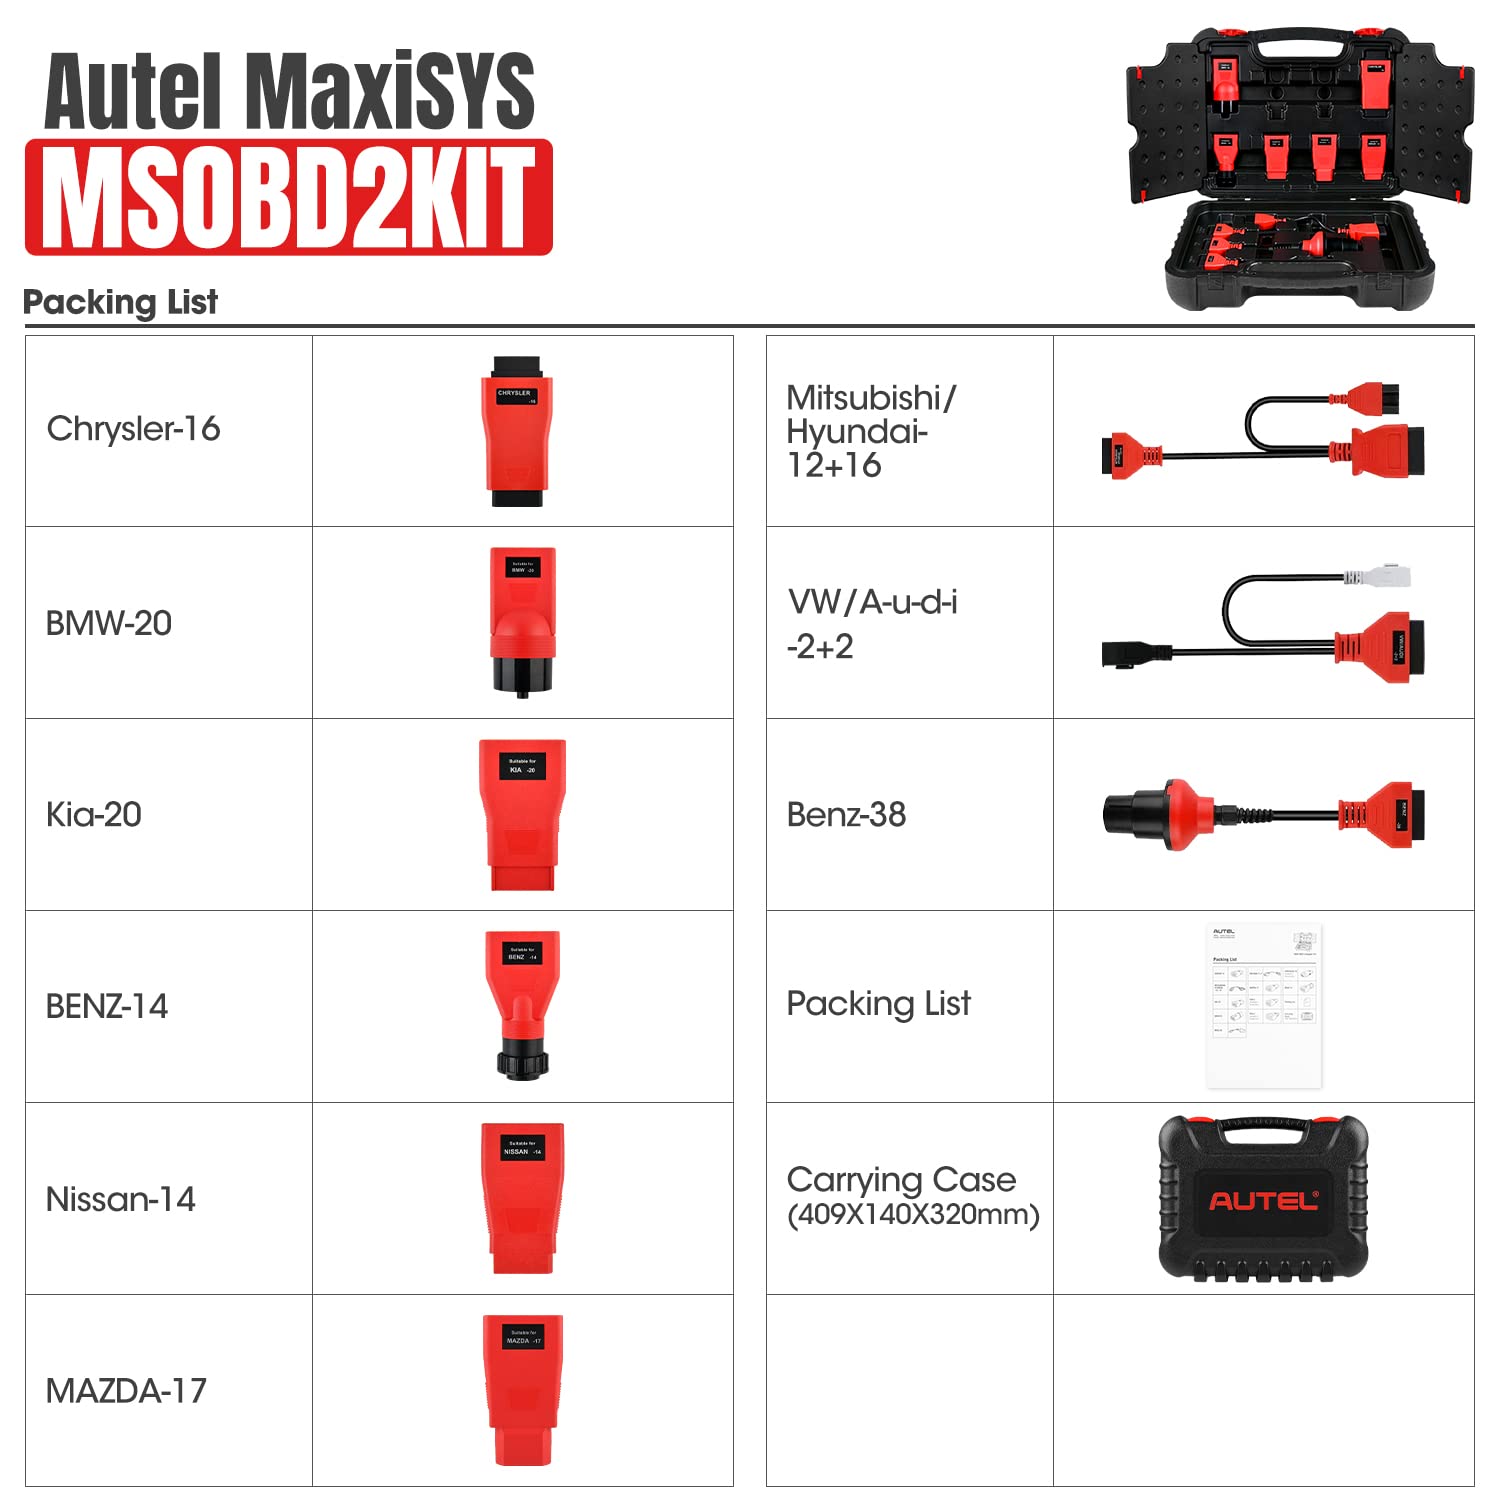 Autel MaxiSYS MSOBD2KIT Non-OBDII Adapter Kit Included: Nissan-14, Mitsubishi/Hyundai 12+16, Kia-20, BMW-20, Benz-38, VW/Audi-2+2, Mazda-17, Chrysler-16 and Benz-14 9 connector